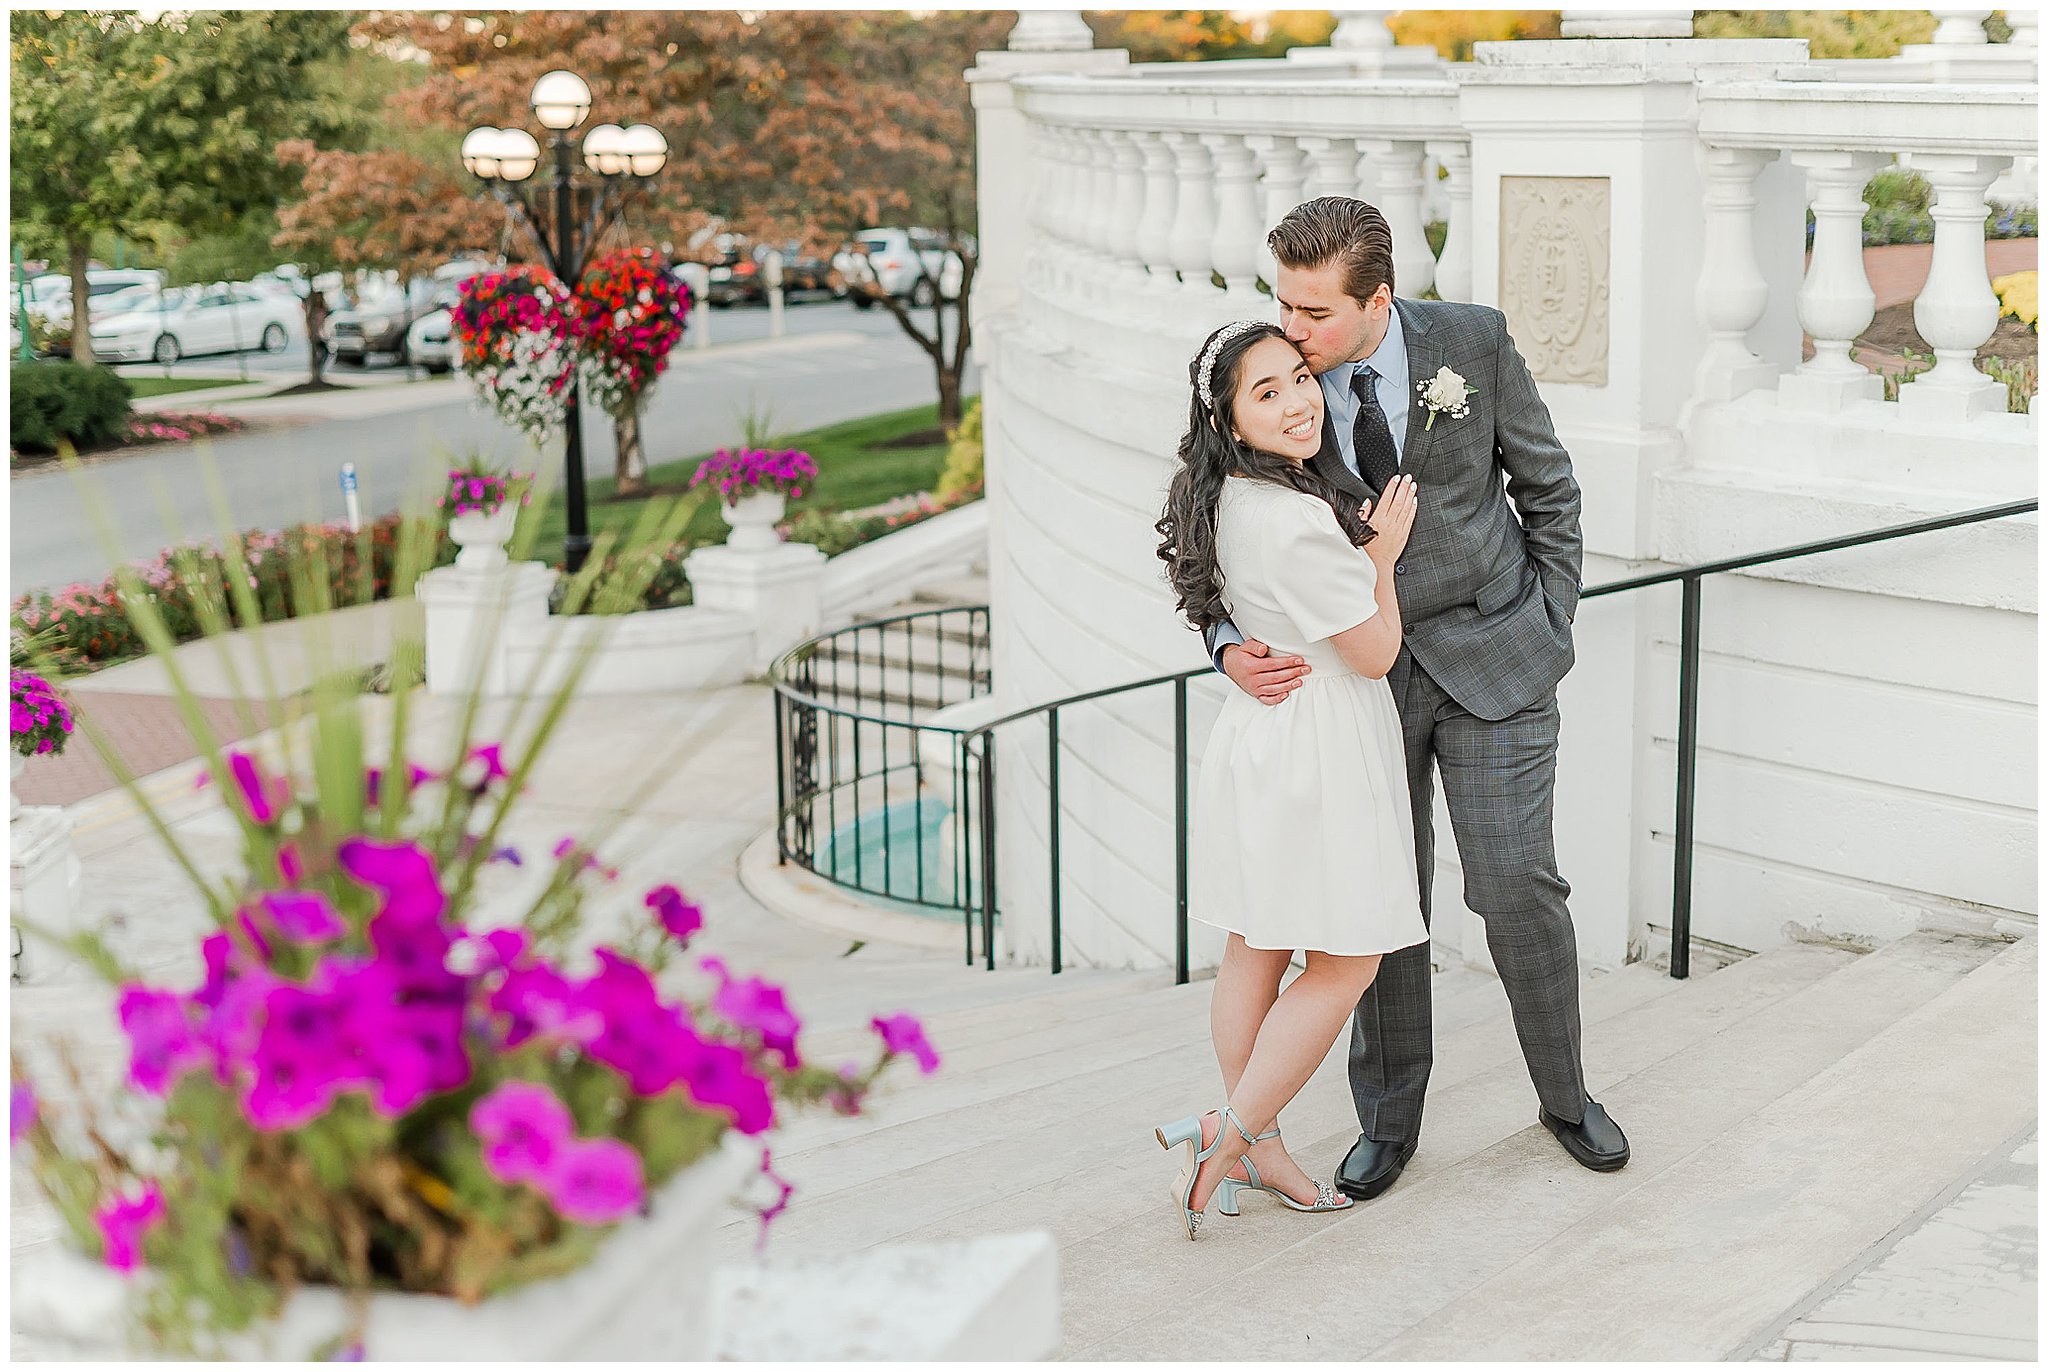 Hotel Hershey | Hotel Hershey Wedding | Intimate Hotel Hershey Wedding | Bride and Groom Poses | Bride and Groom Wedding Poses